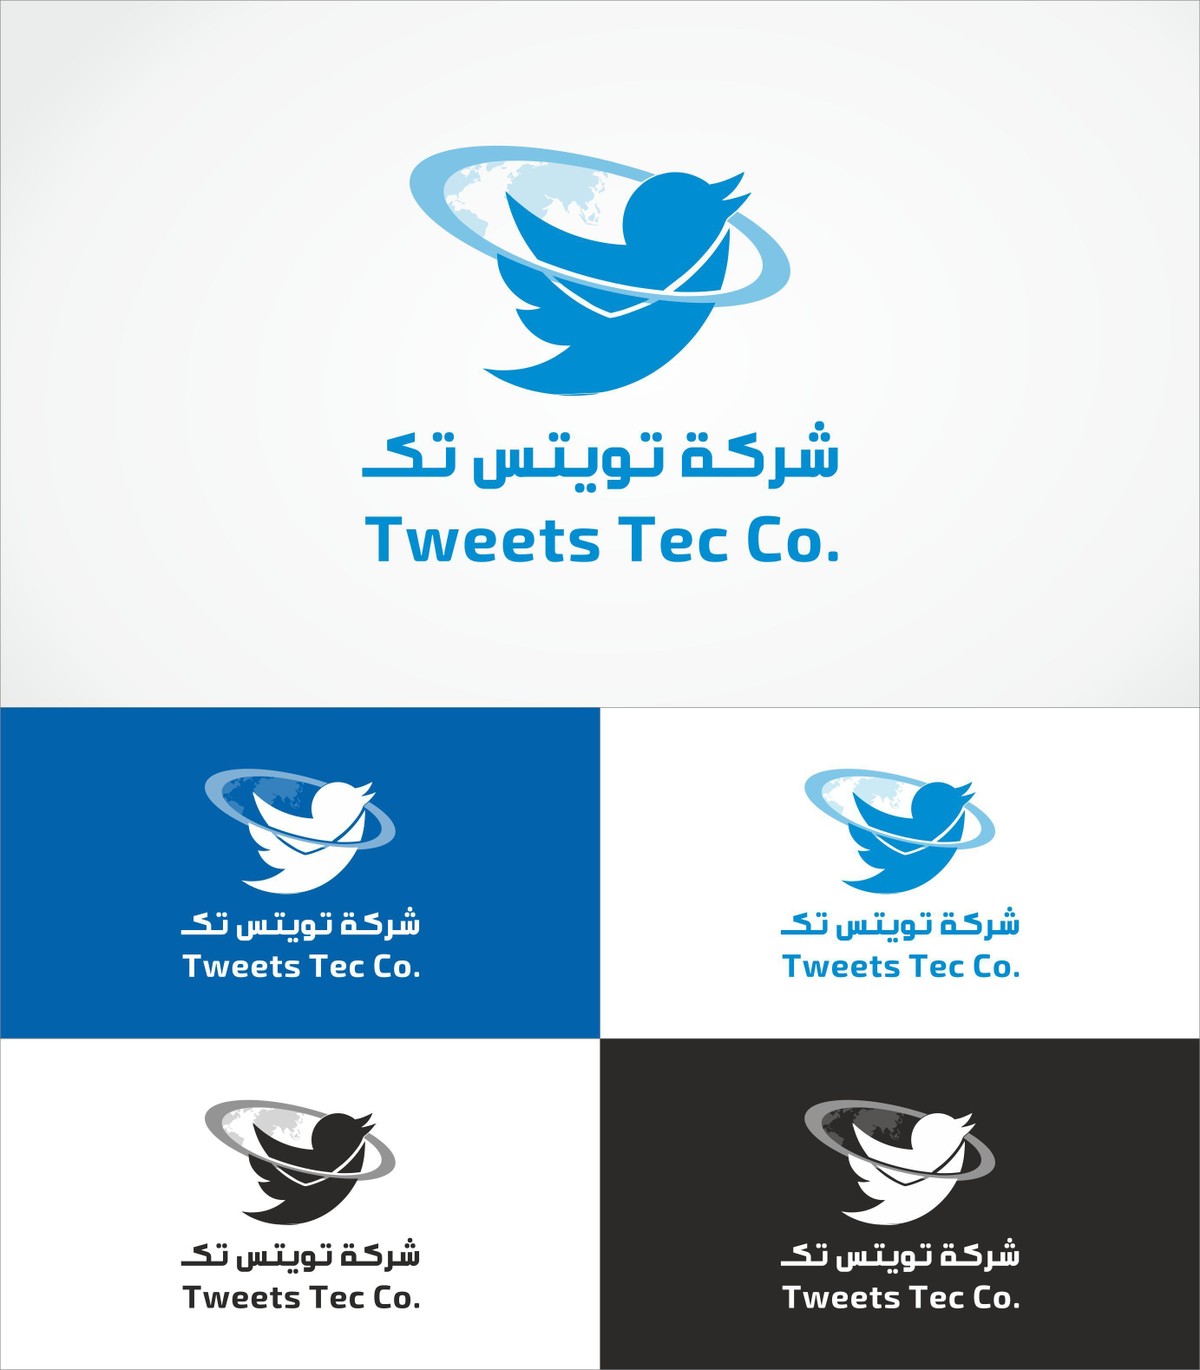 tweets logo